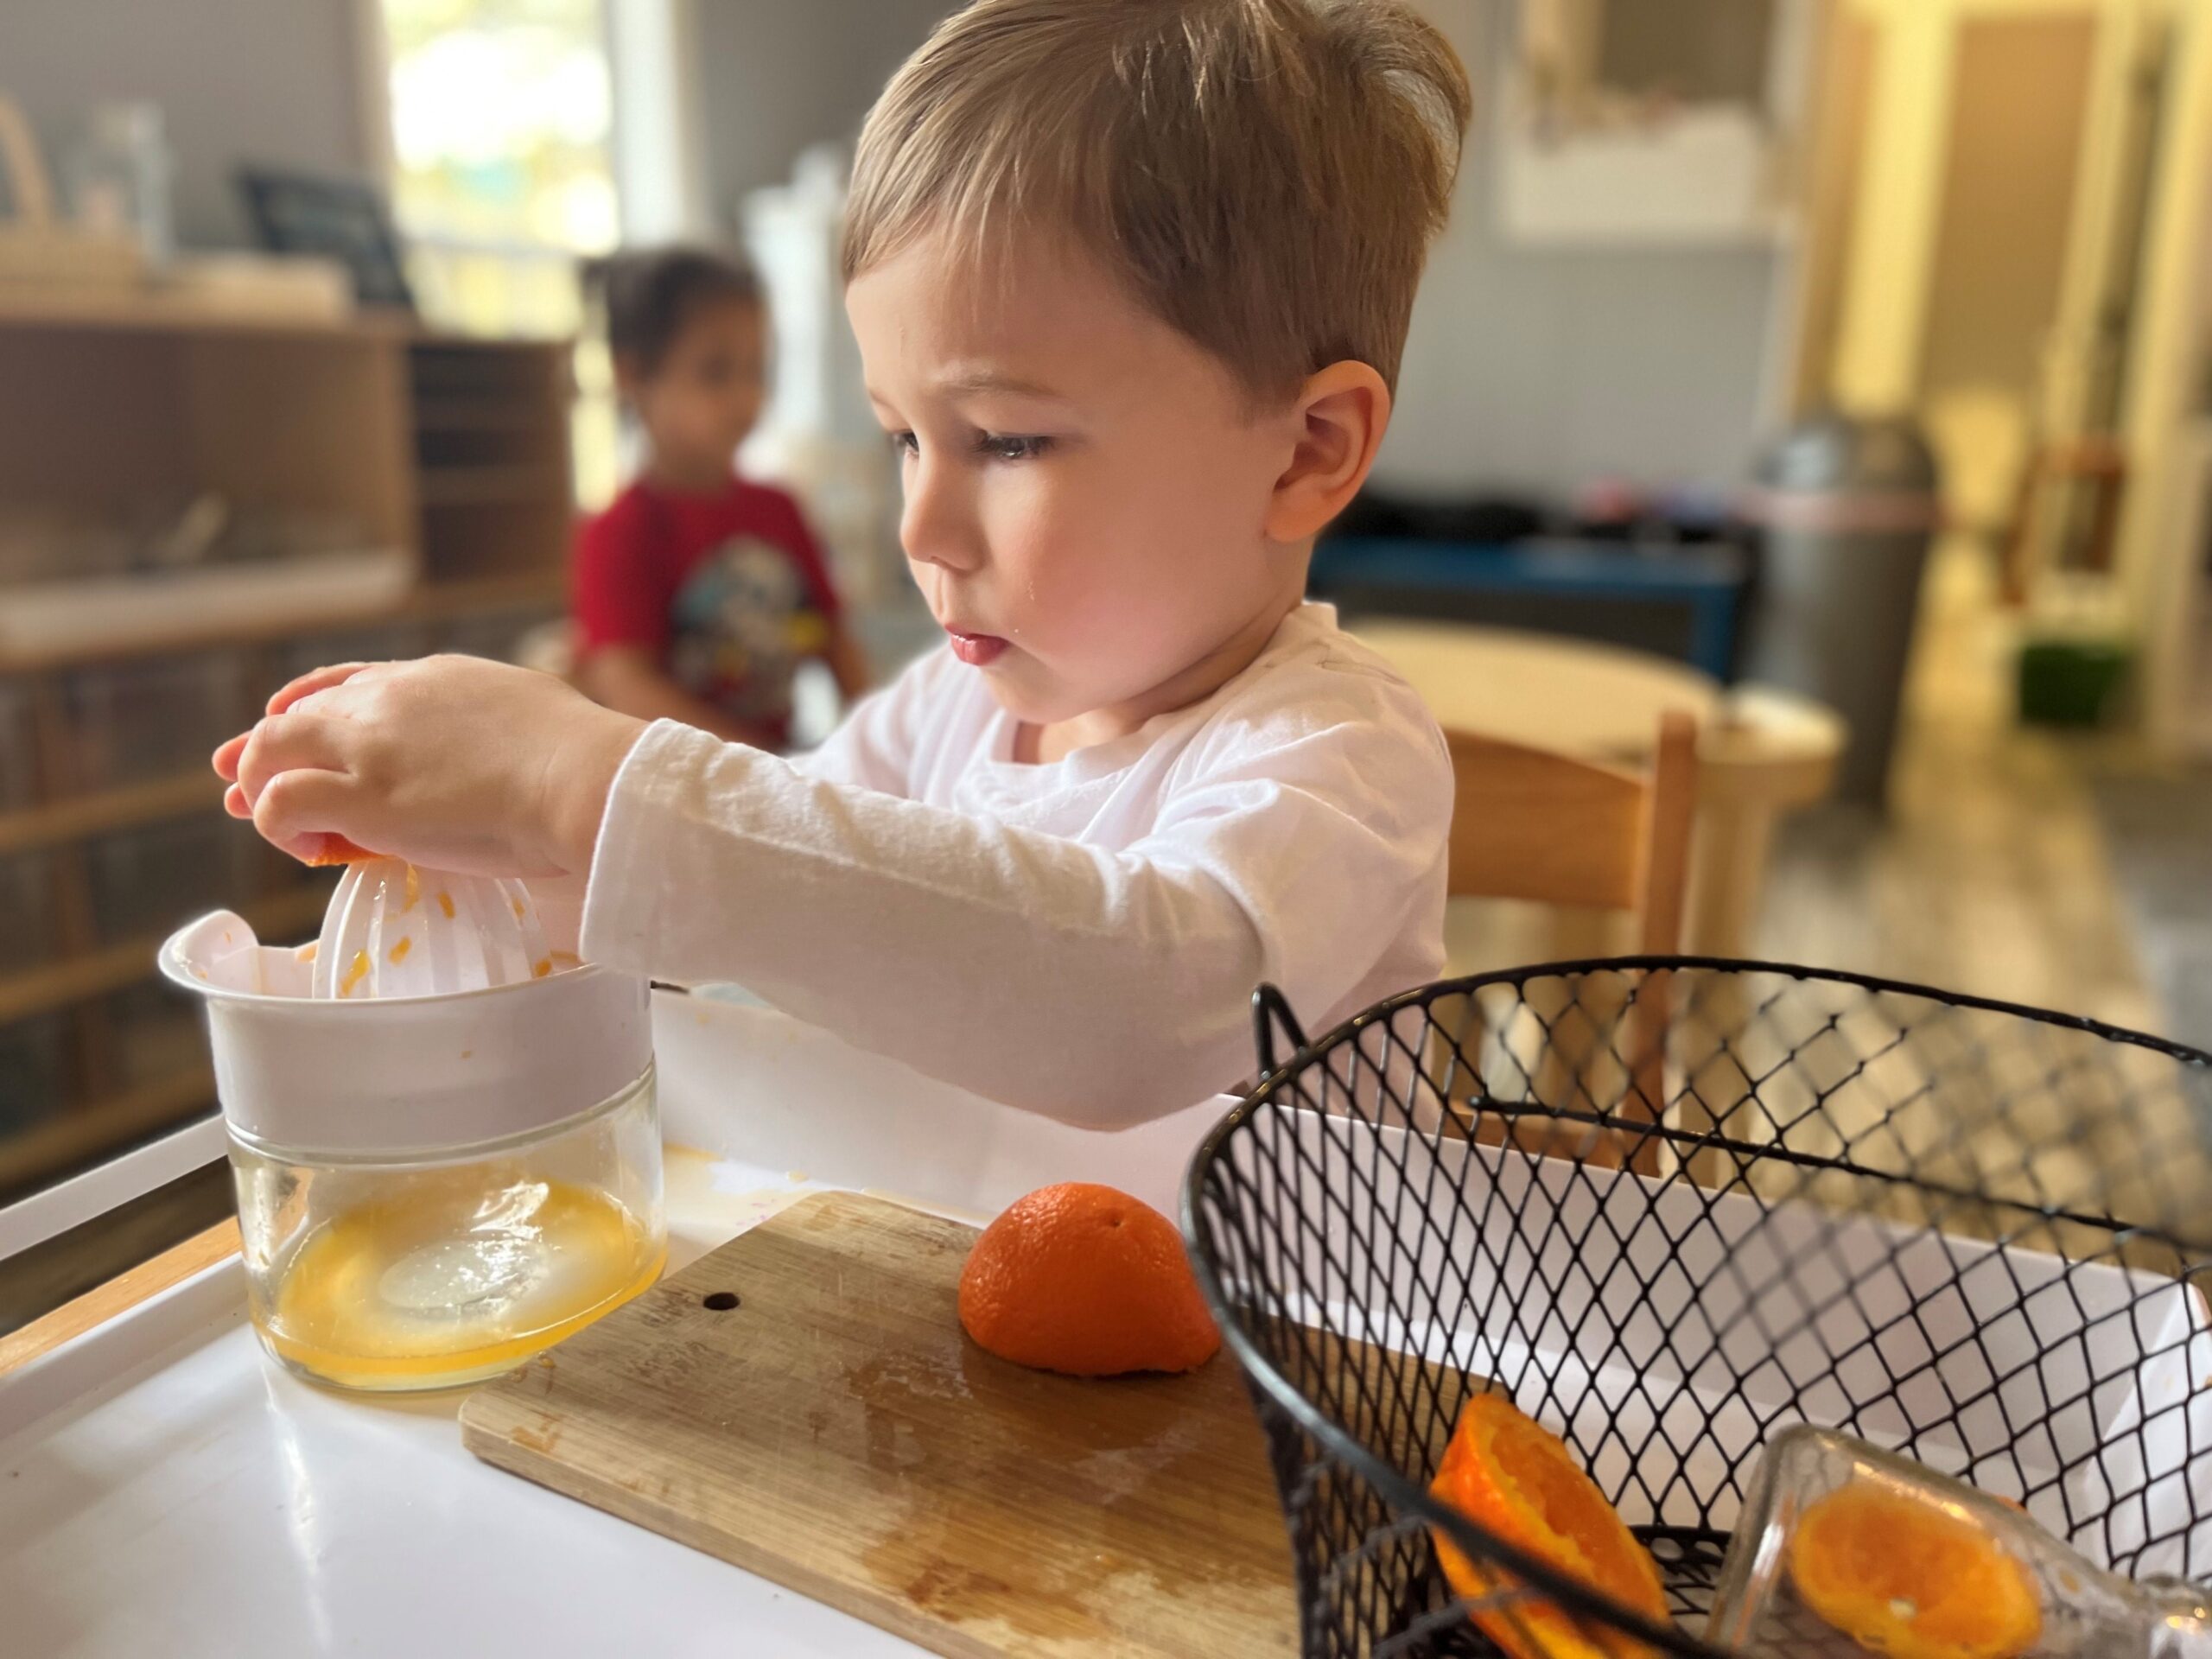 A small child squeezing fresh orange juice